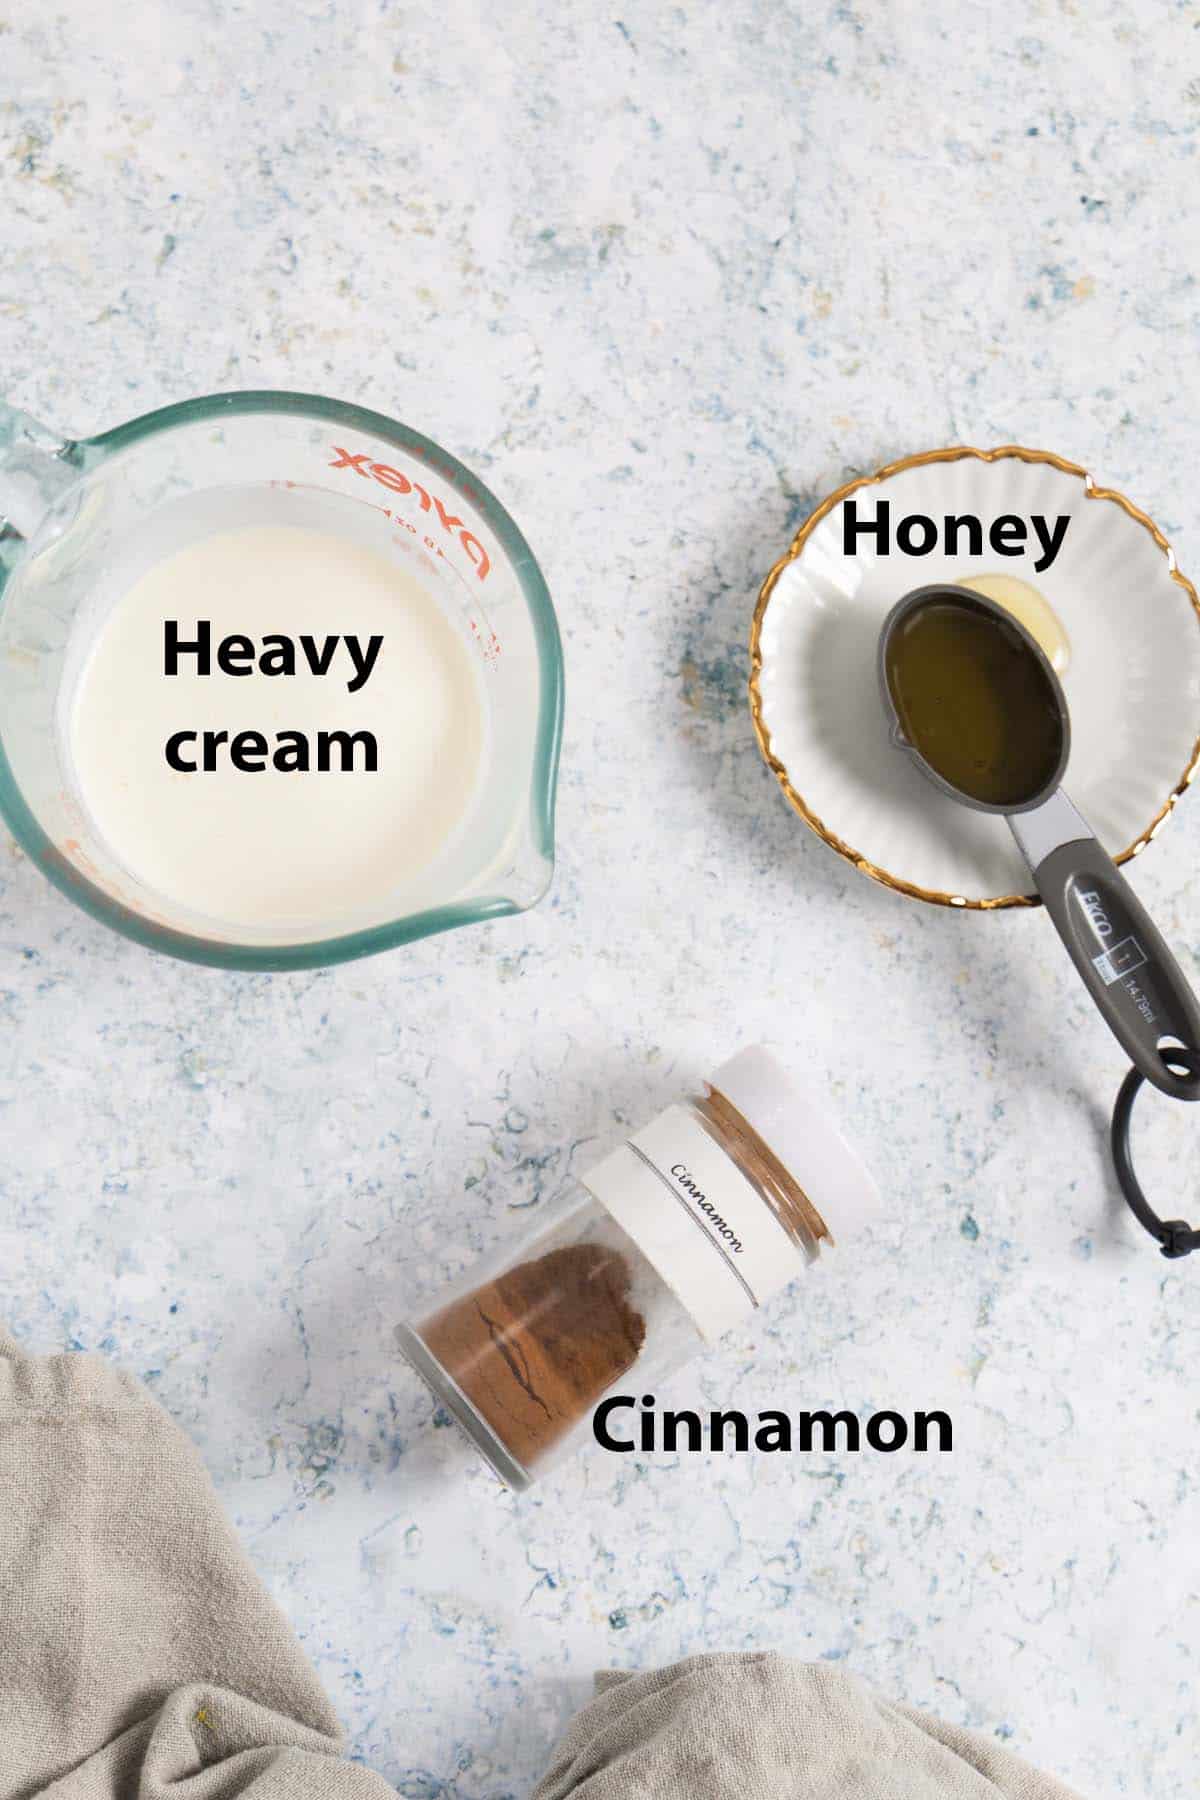 labelled ingredients: heavy cream, cinnamon and honey.